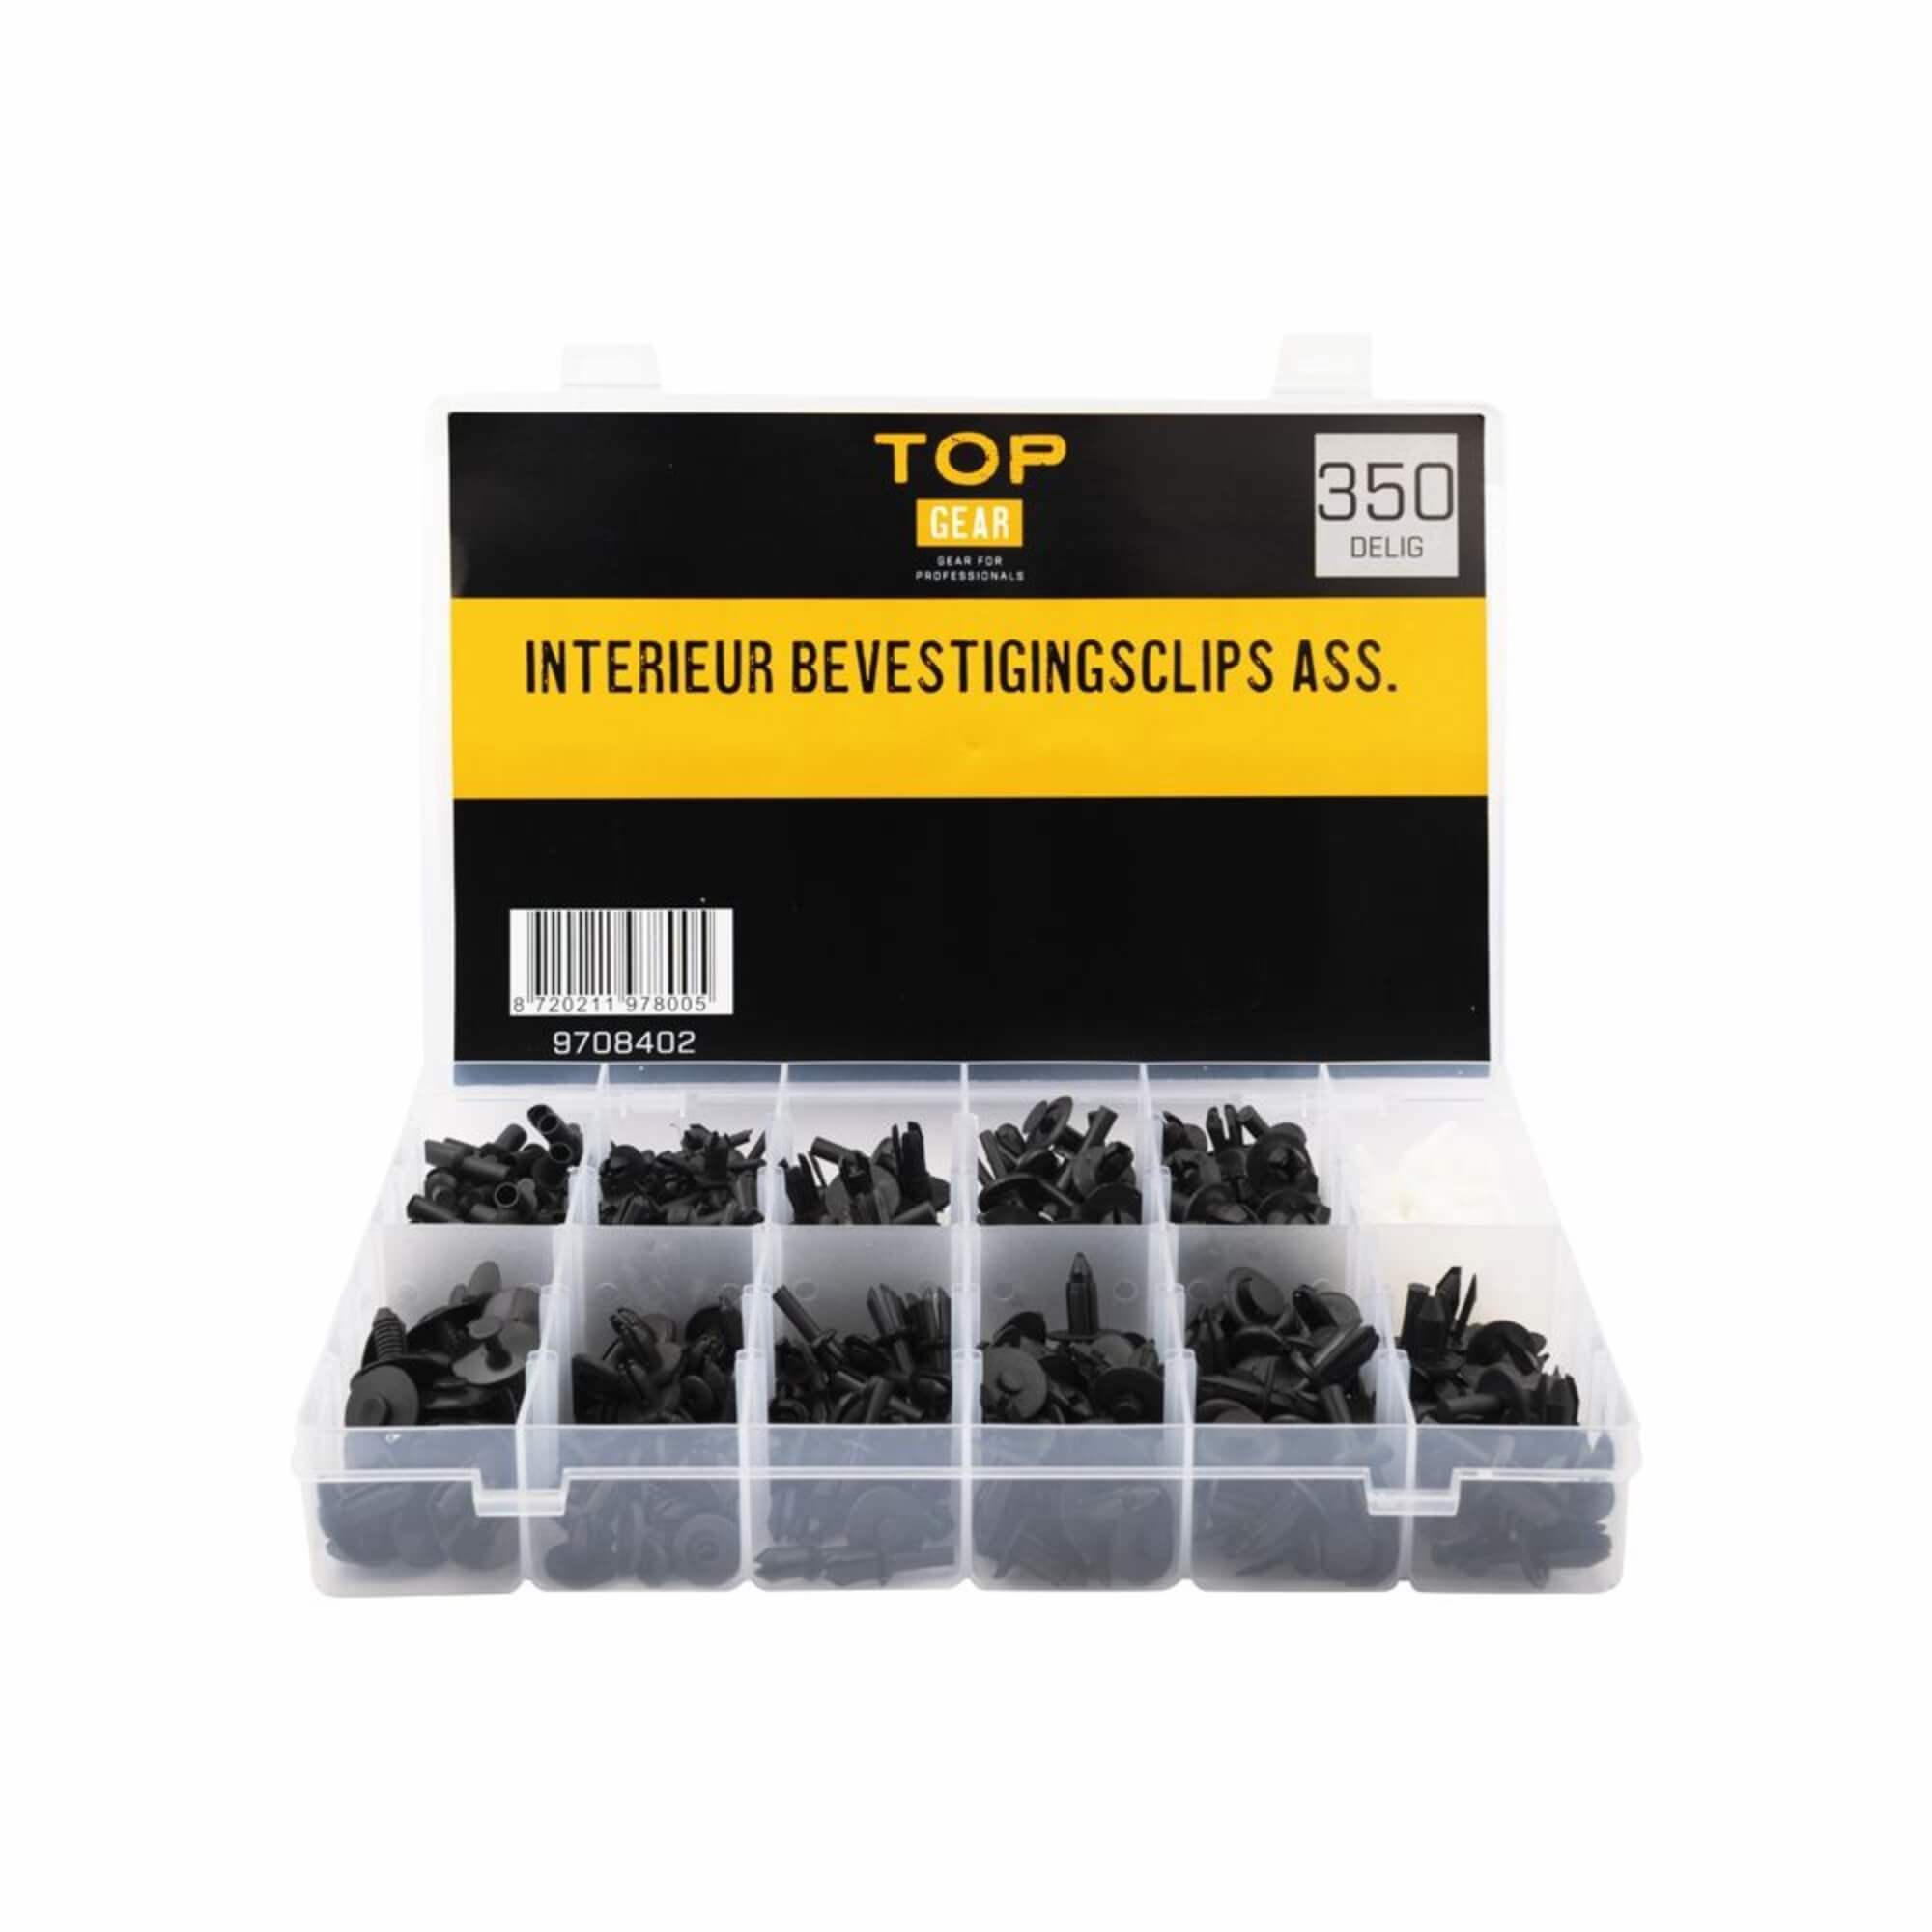 Topgear Interieur Bevestigingsclips Assortimentsbox - 350 delig